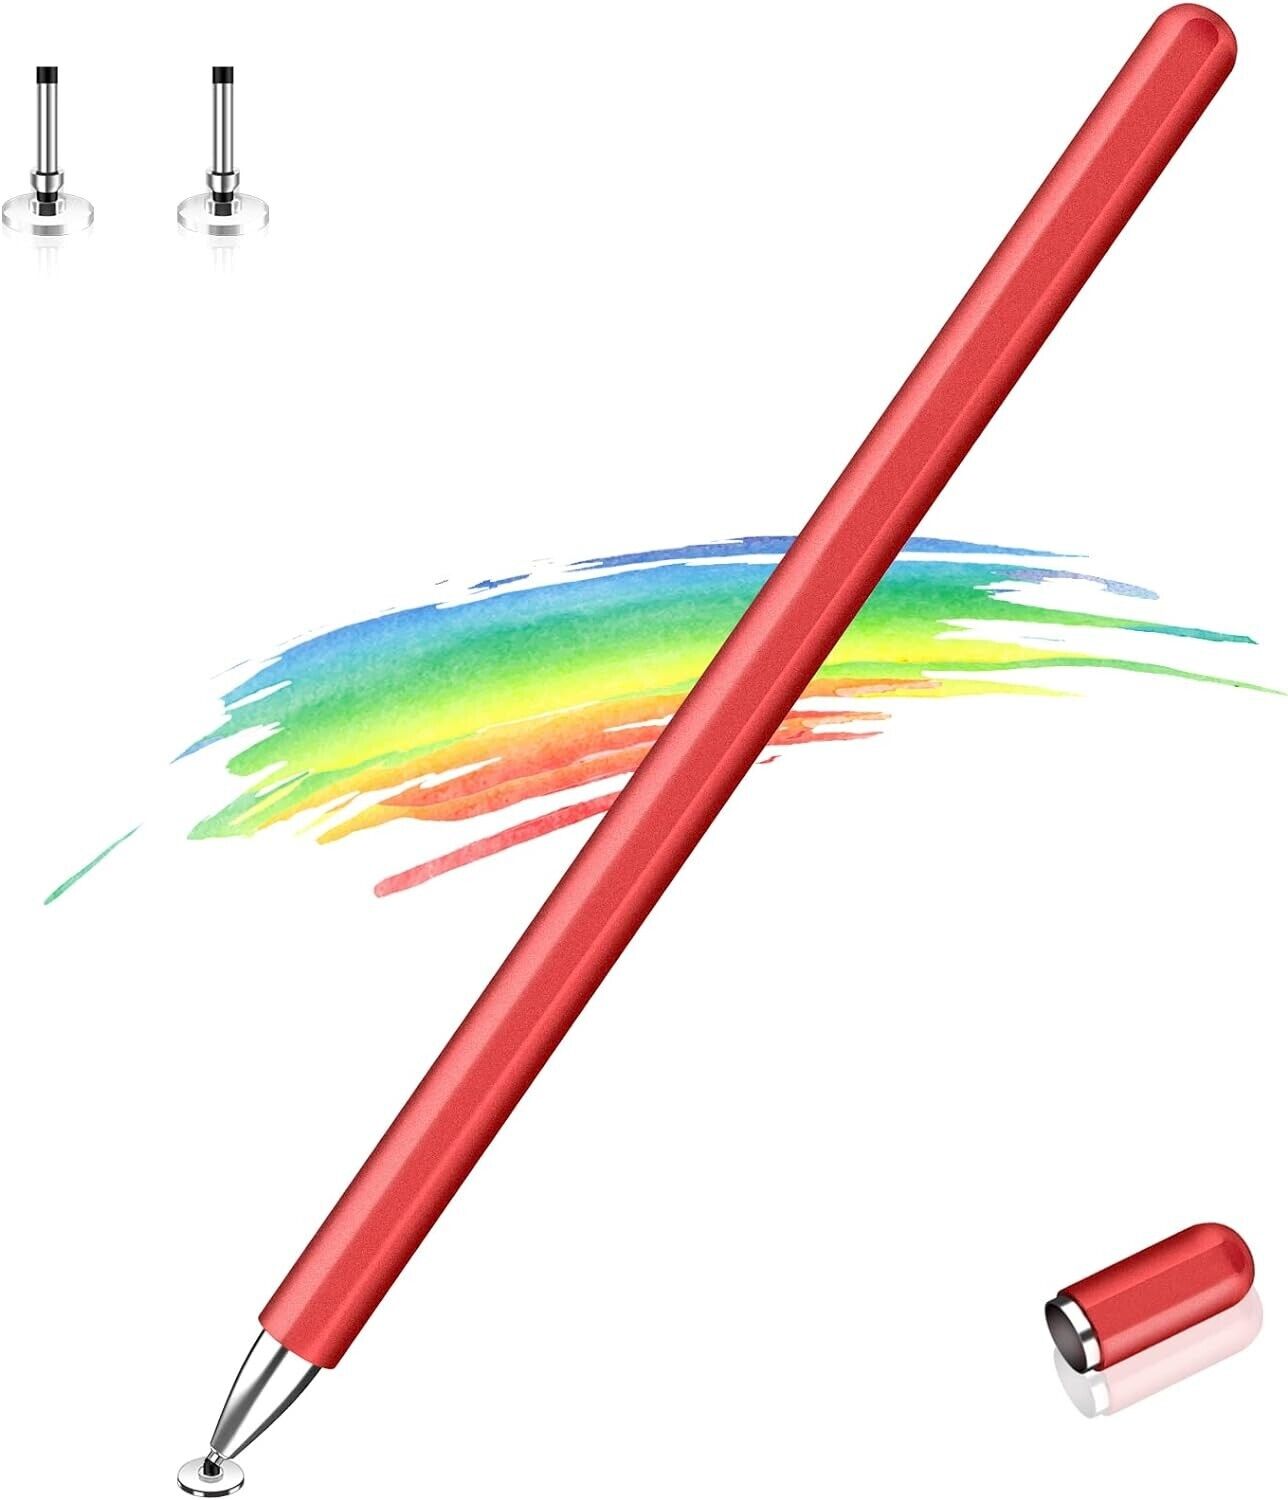 Stylus Pen for iPad - MEKO Universal Capacitive Stylus Pencil with Magnetic Cap